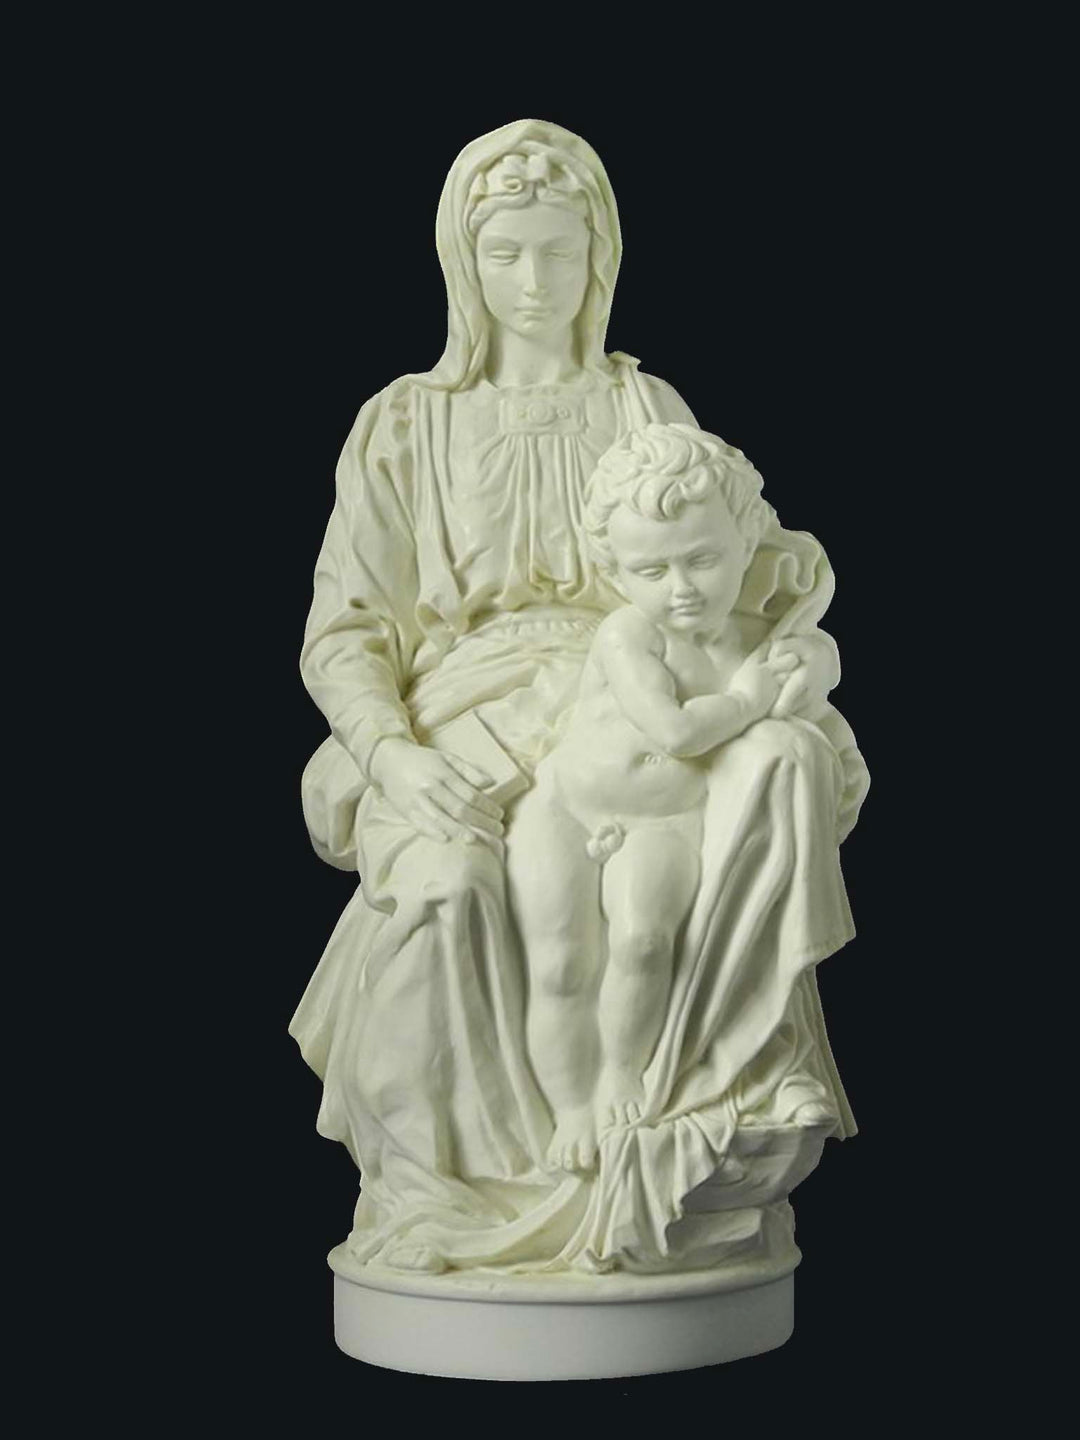 Madonna of Burges, Michelangelo's Madonna and Child Sculpture Replica